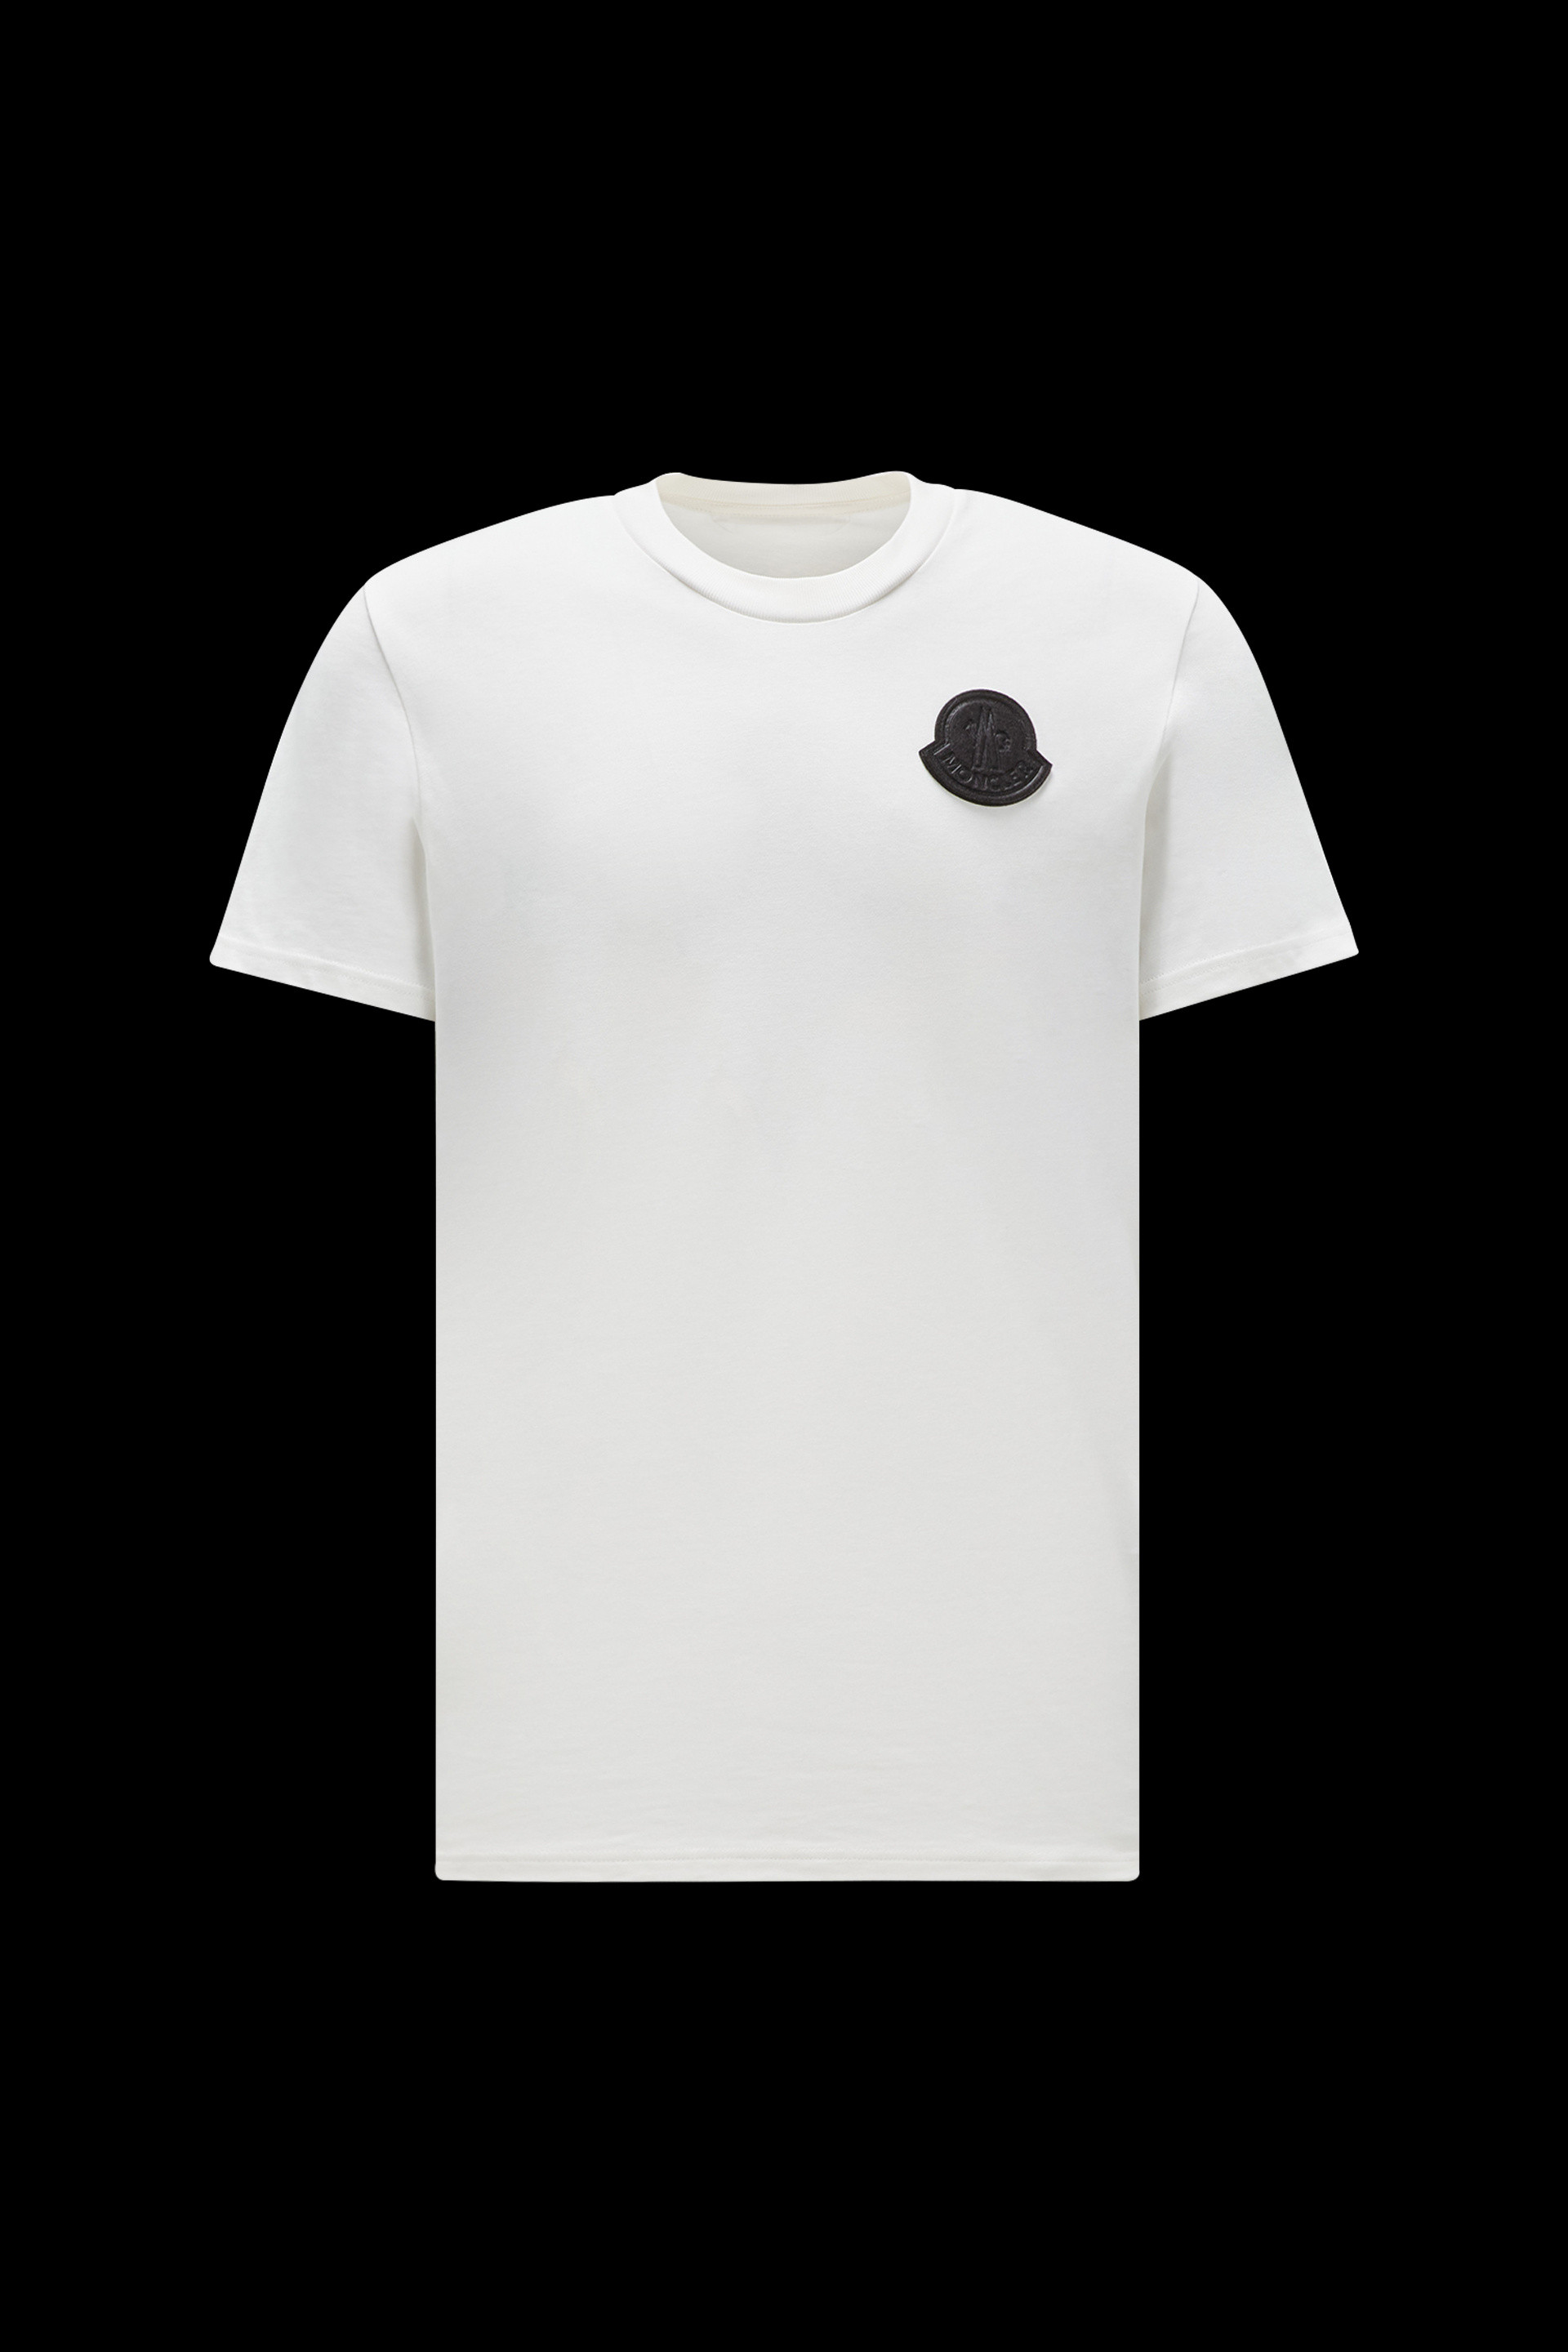 Moncler Collection Men's Printed Motif T-Shirt